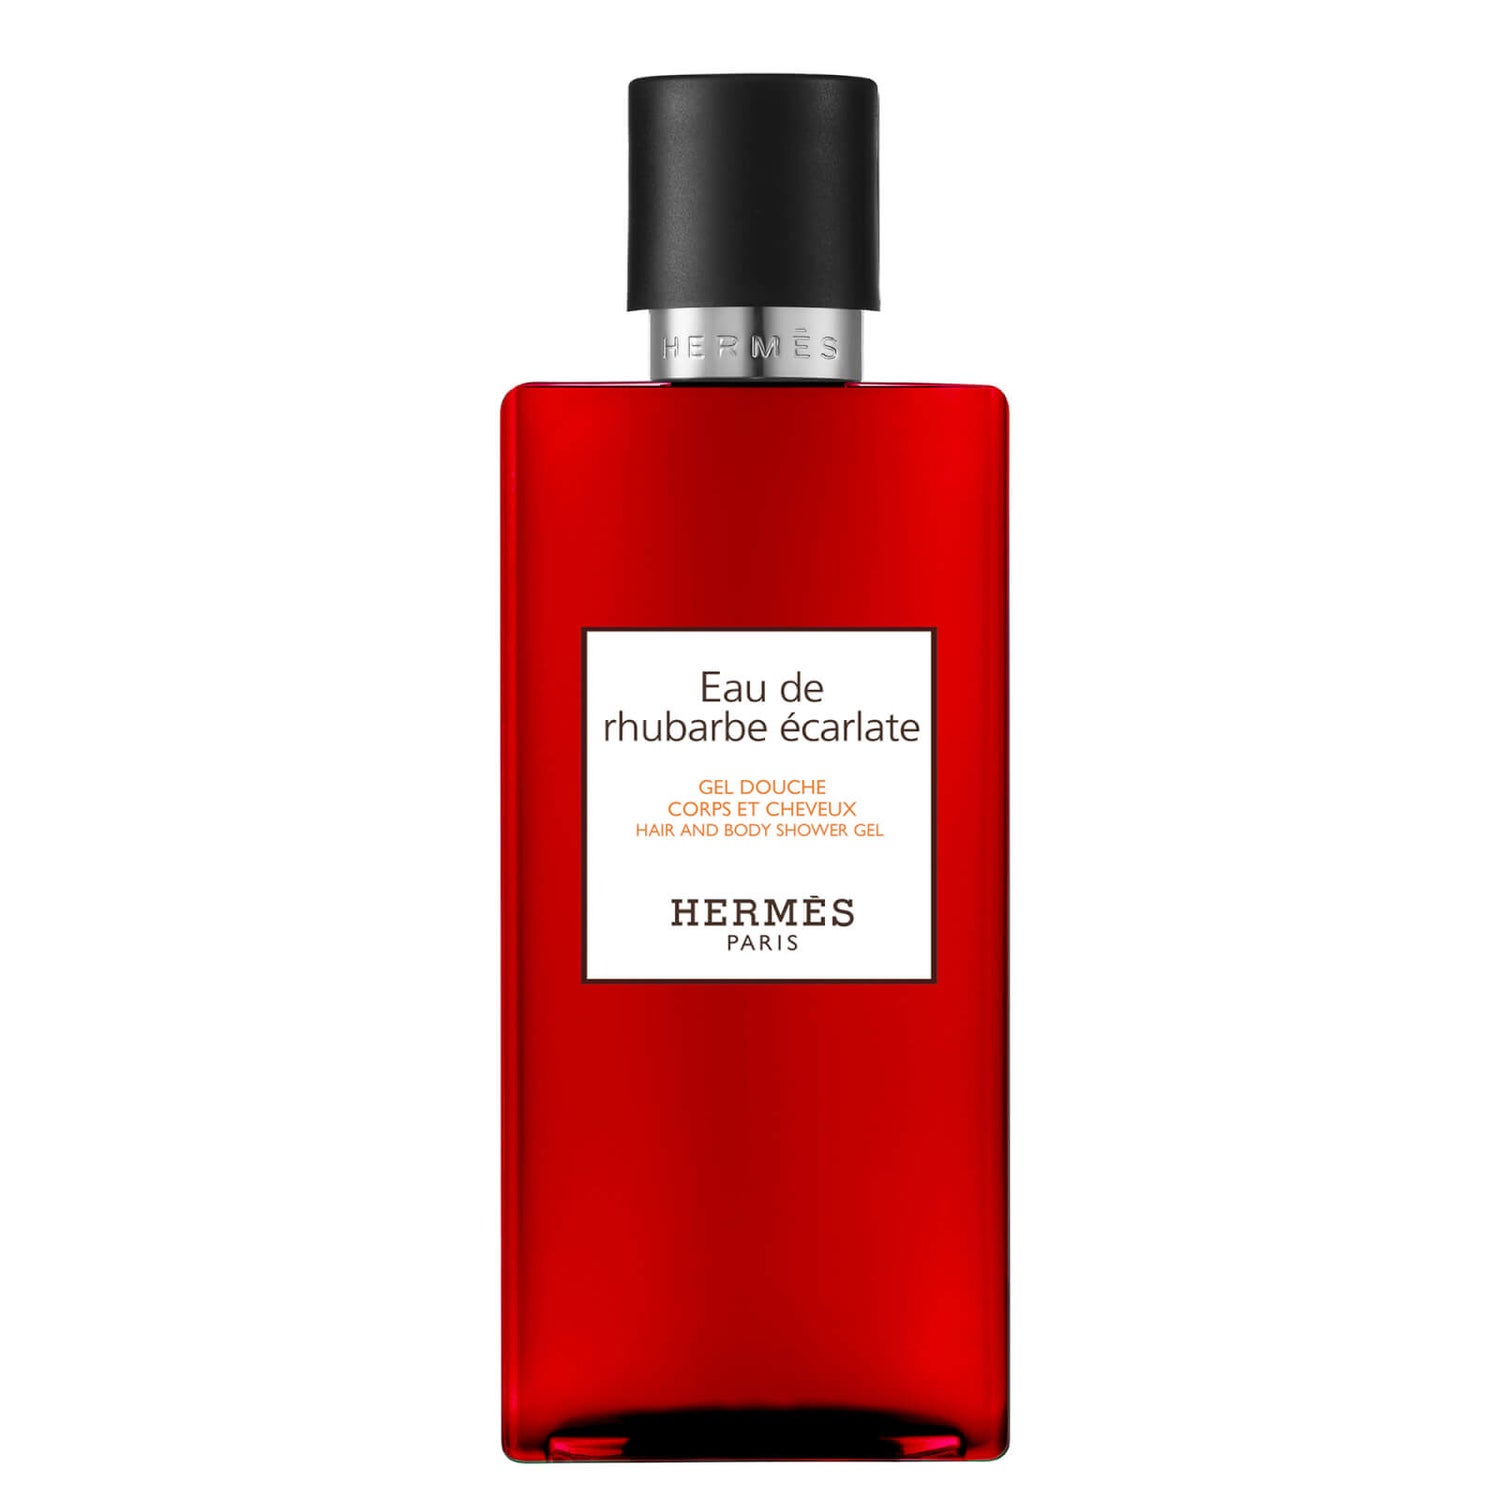 Hermès Eau De Rhubarbe Écarlate Hair And Body Shower Gel 200ml Bottle